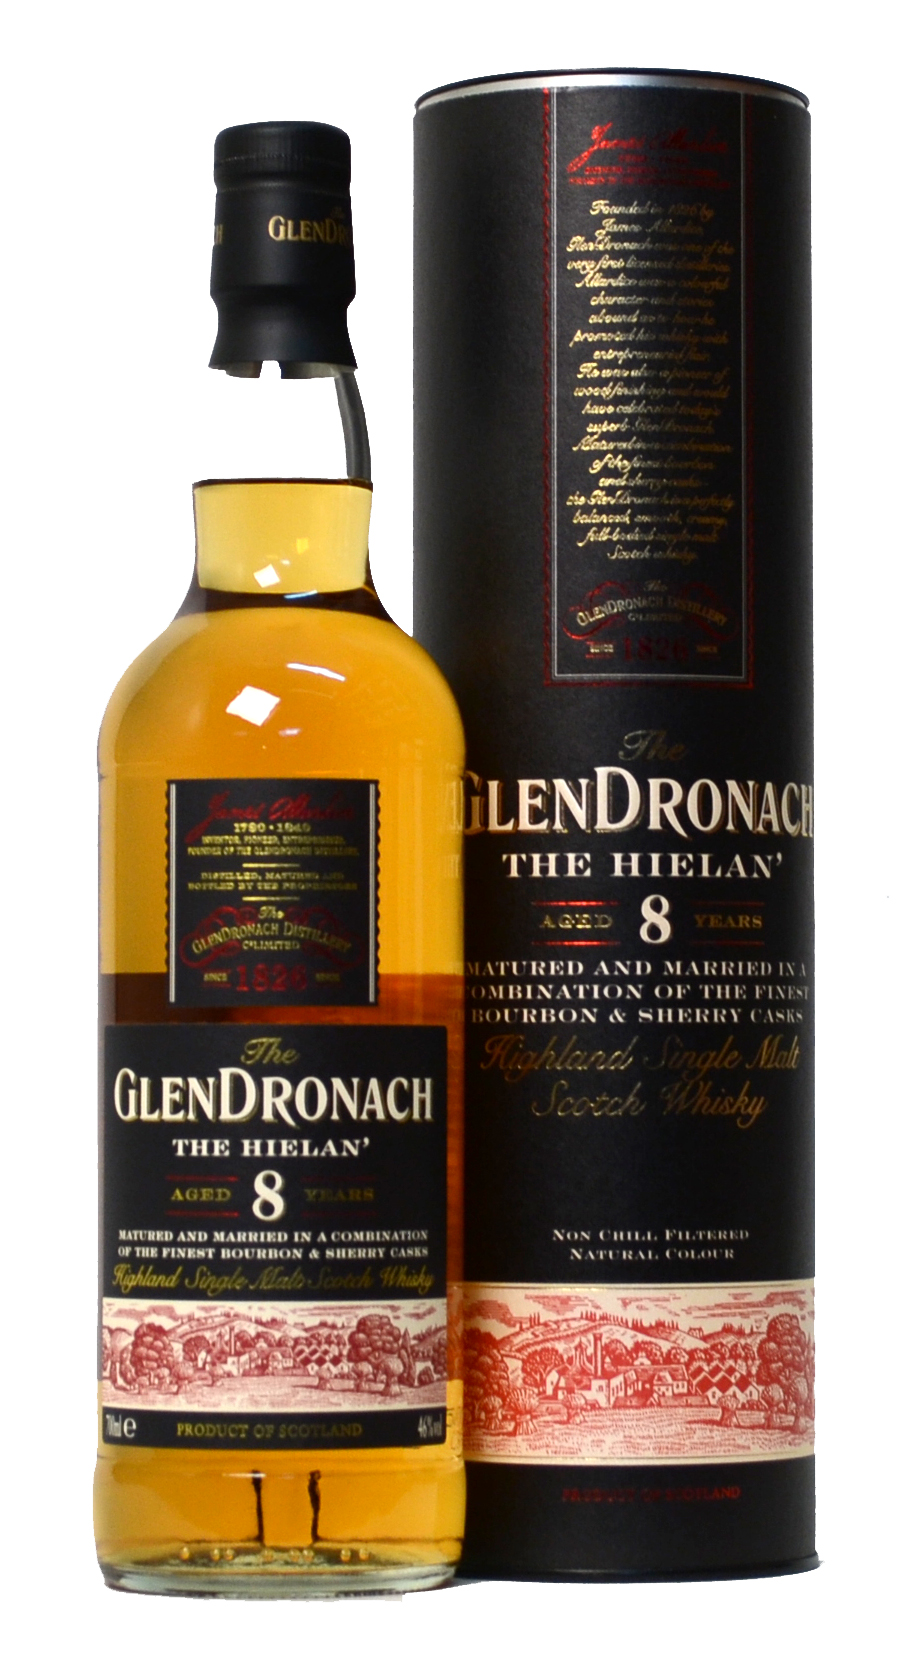 Peave Afkorting Overeenstemming Glendronach The Hielan whisky kaufen